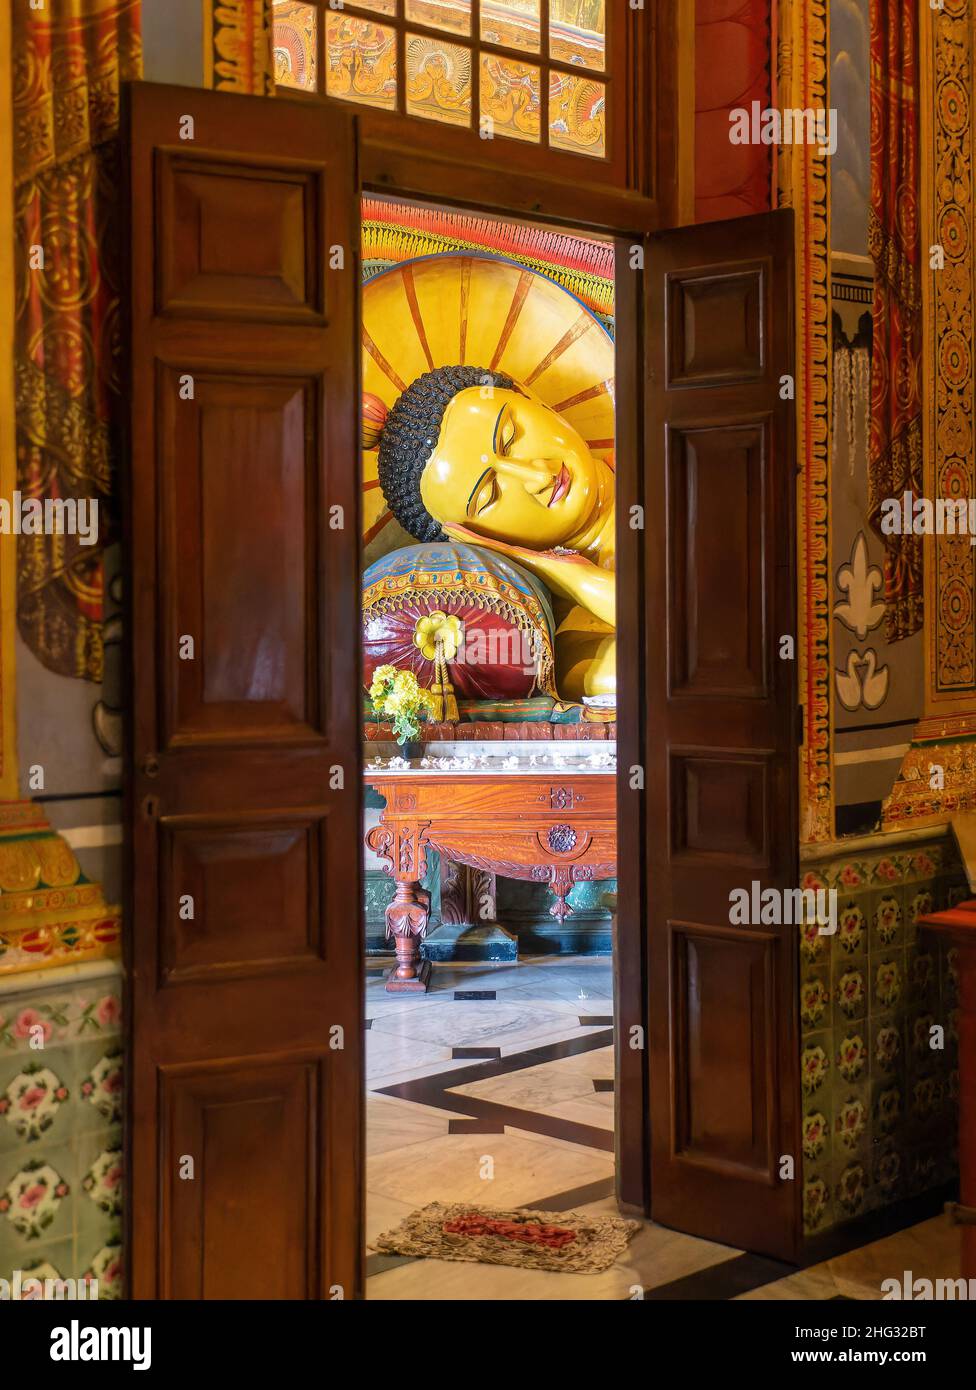 Interior of the Asokaramaya Buddhist Temple, Colombo, Sri Lanka, with a sleeping Buddha image visible through a door. Stock Photo